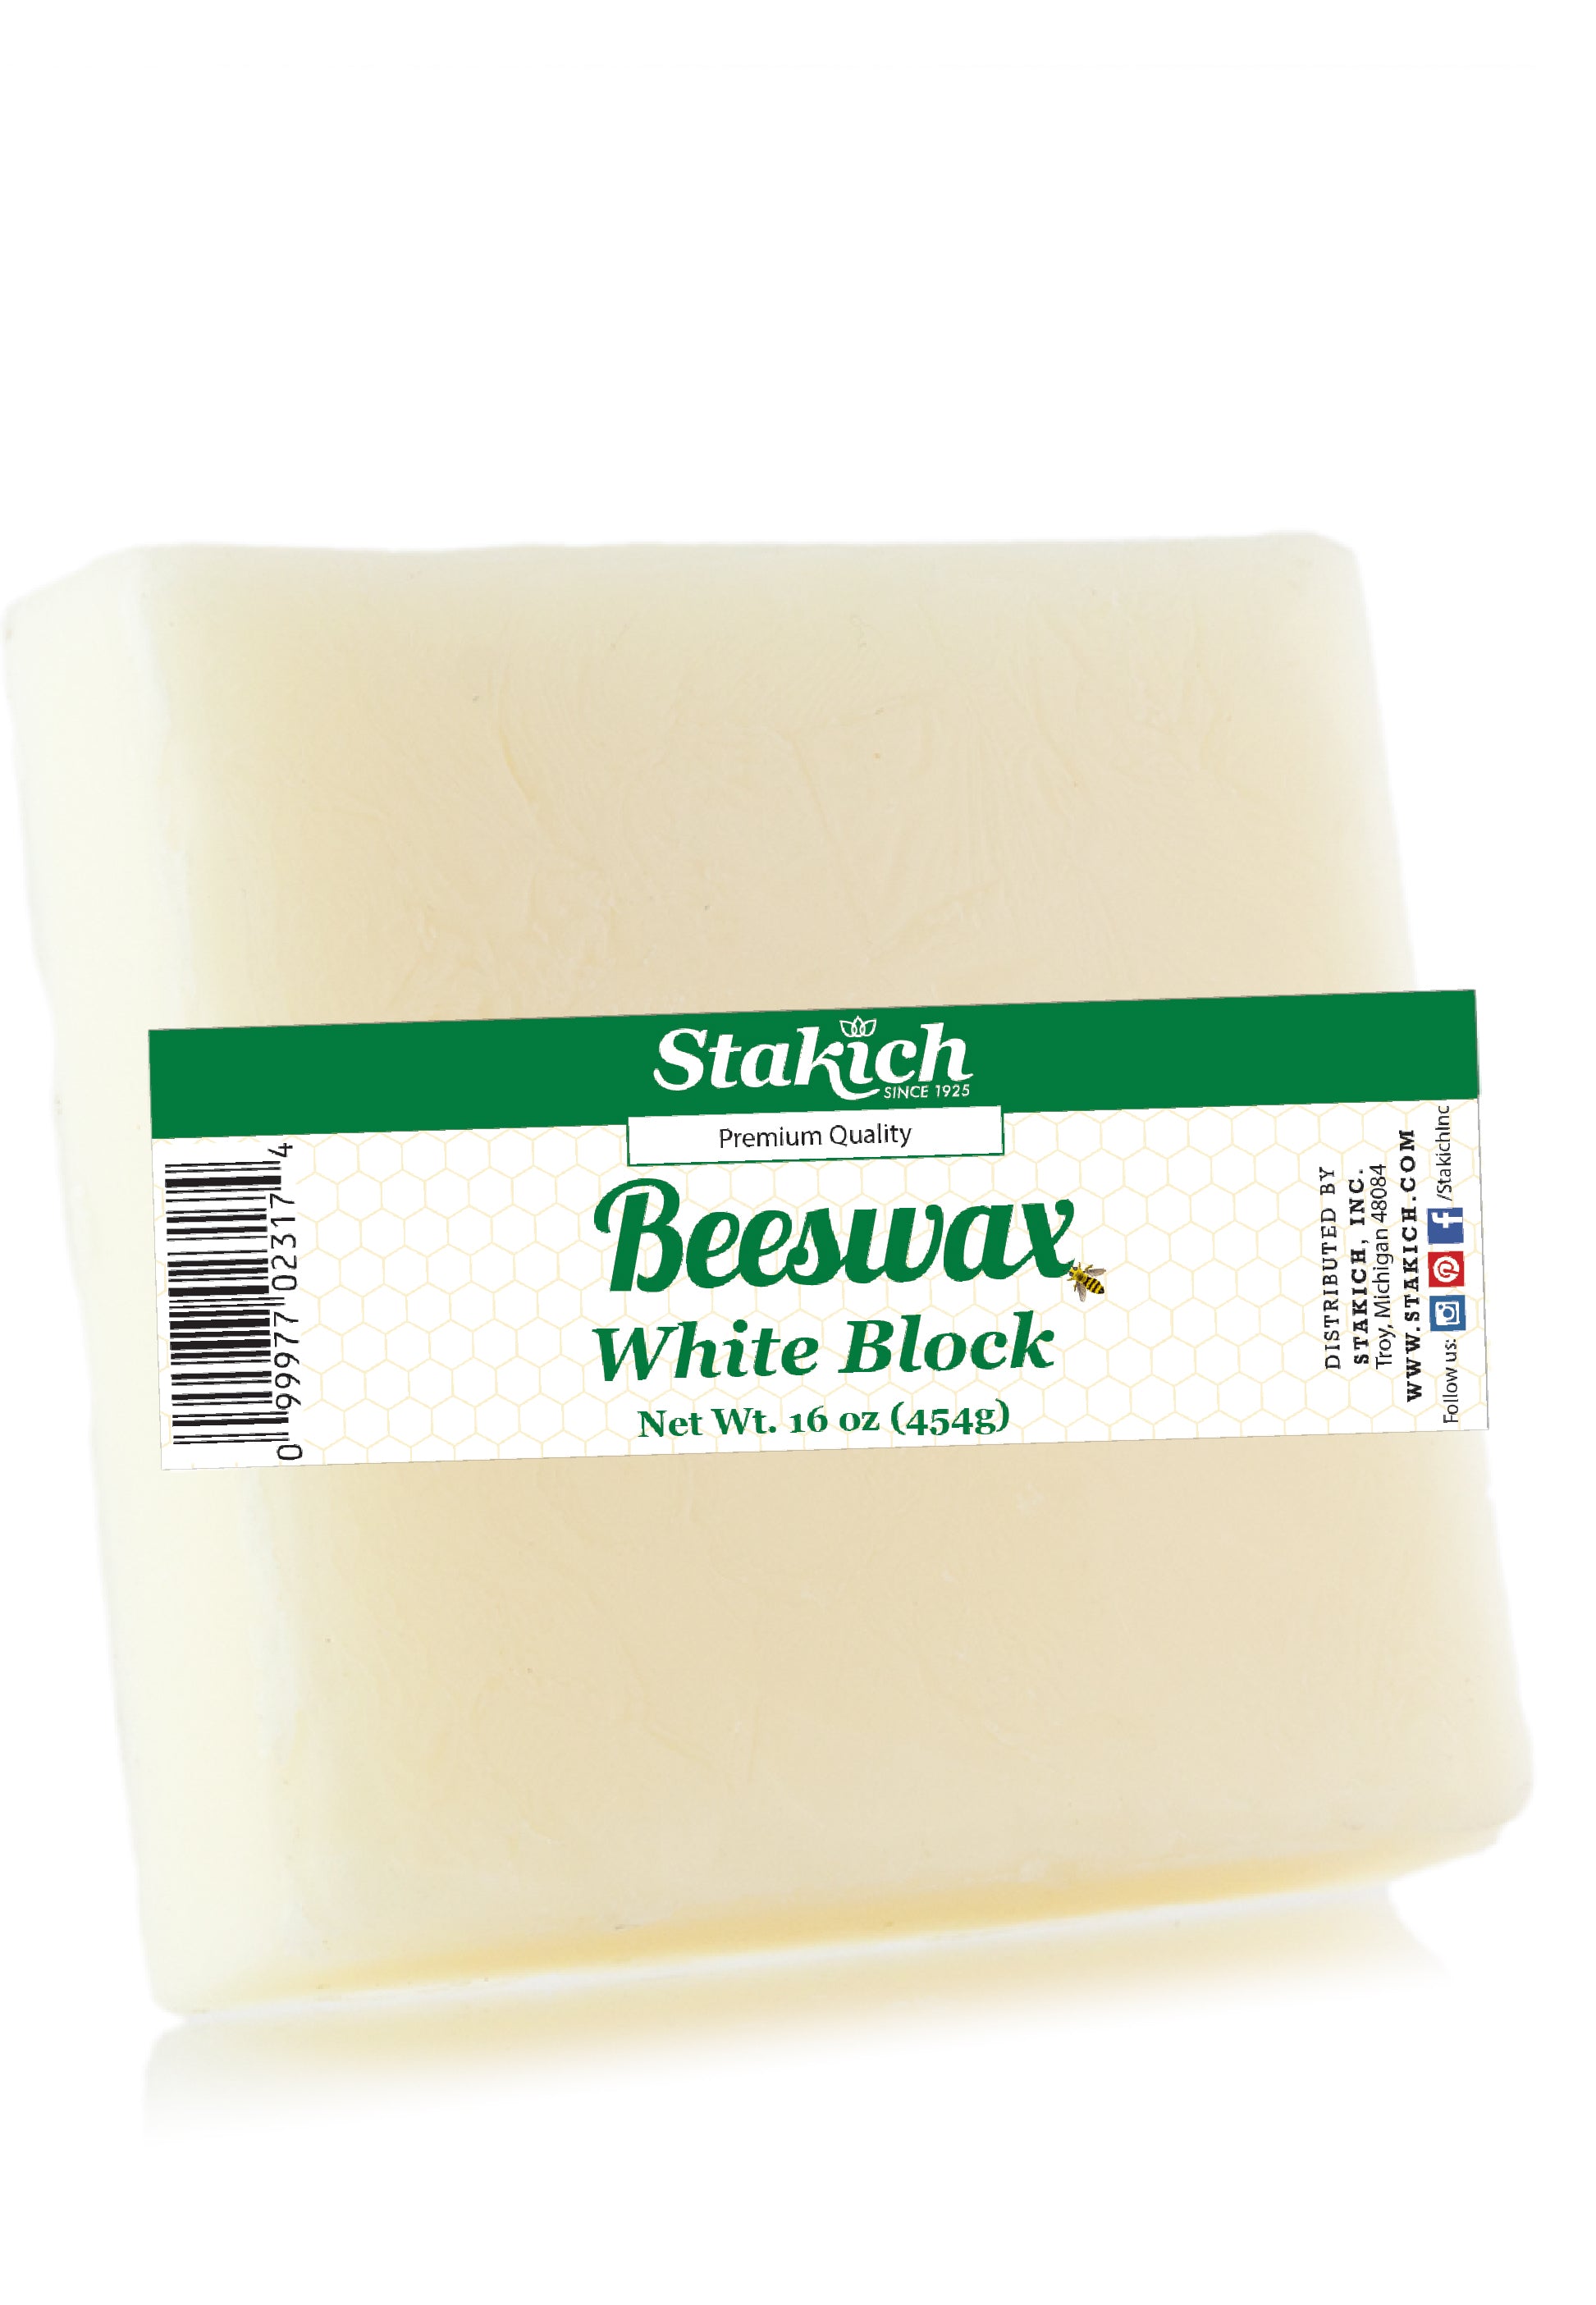 White Beeswax Blocks (40 lb) - Stakich